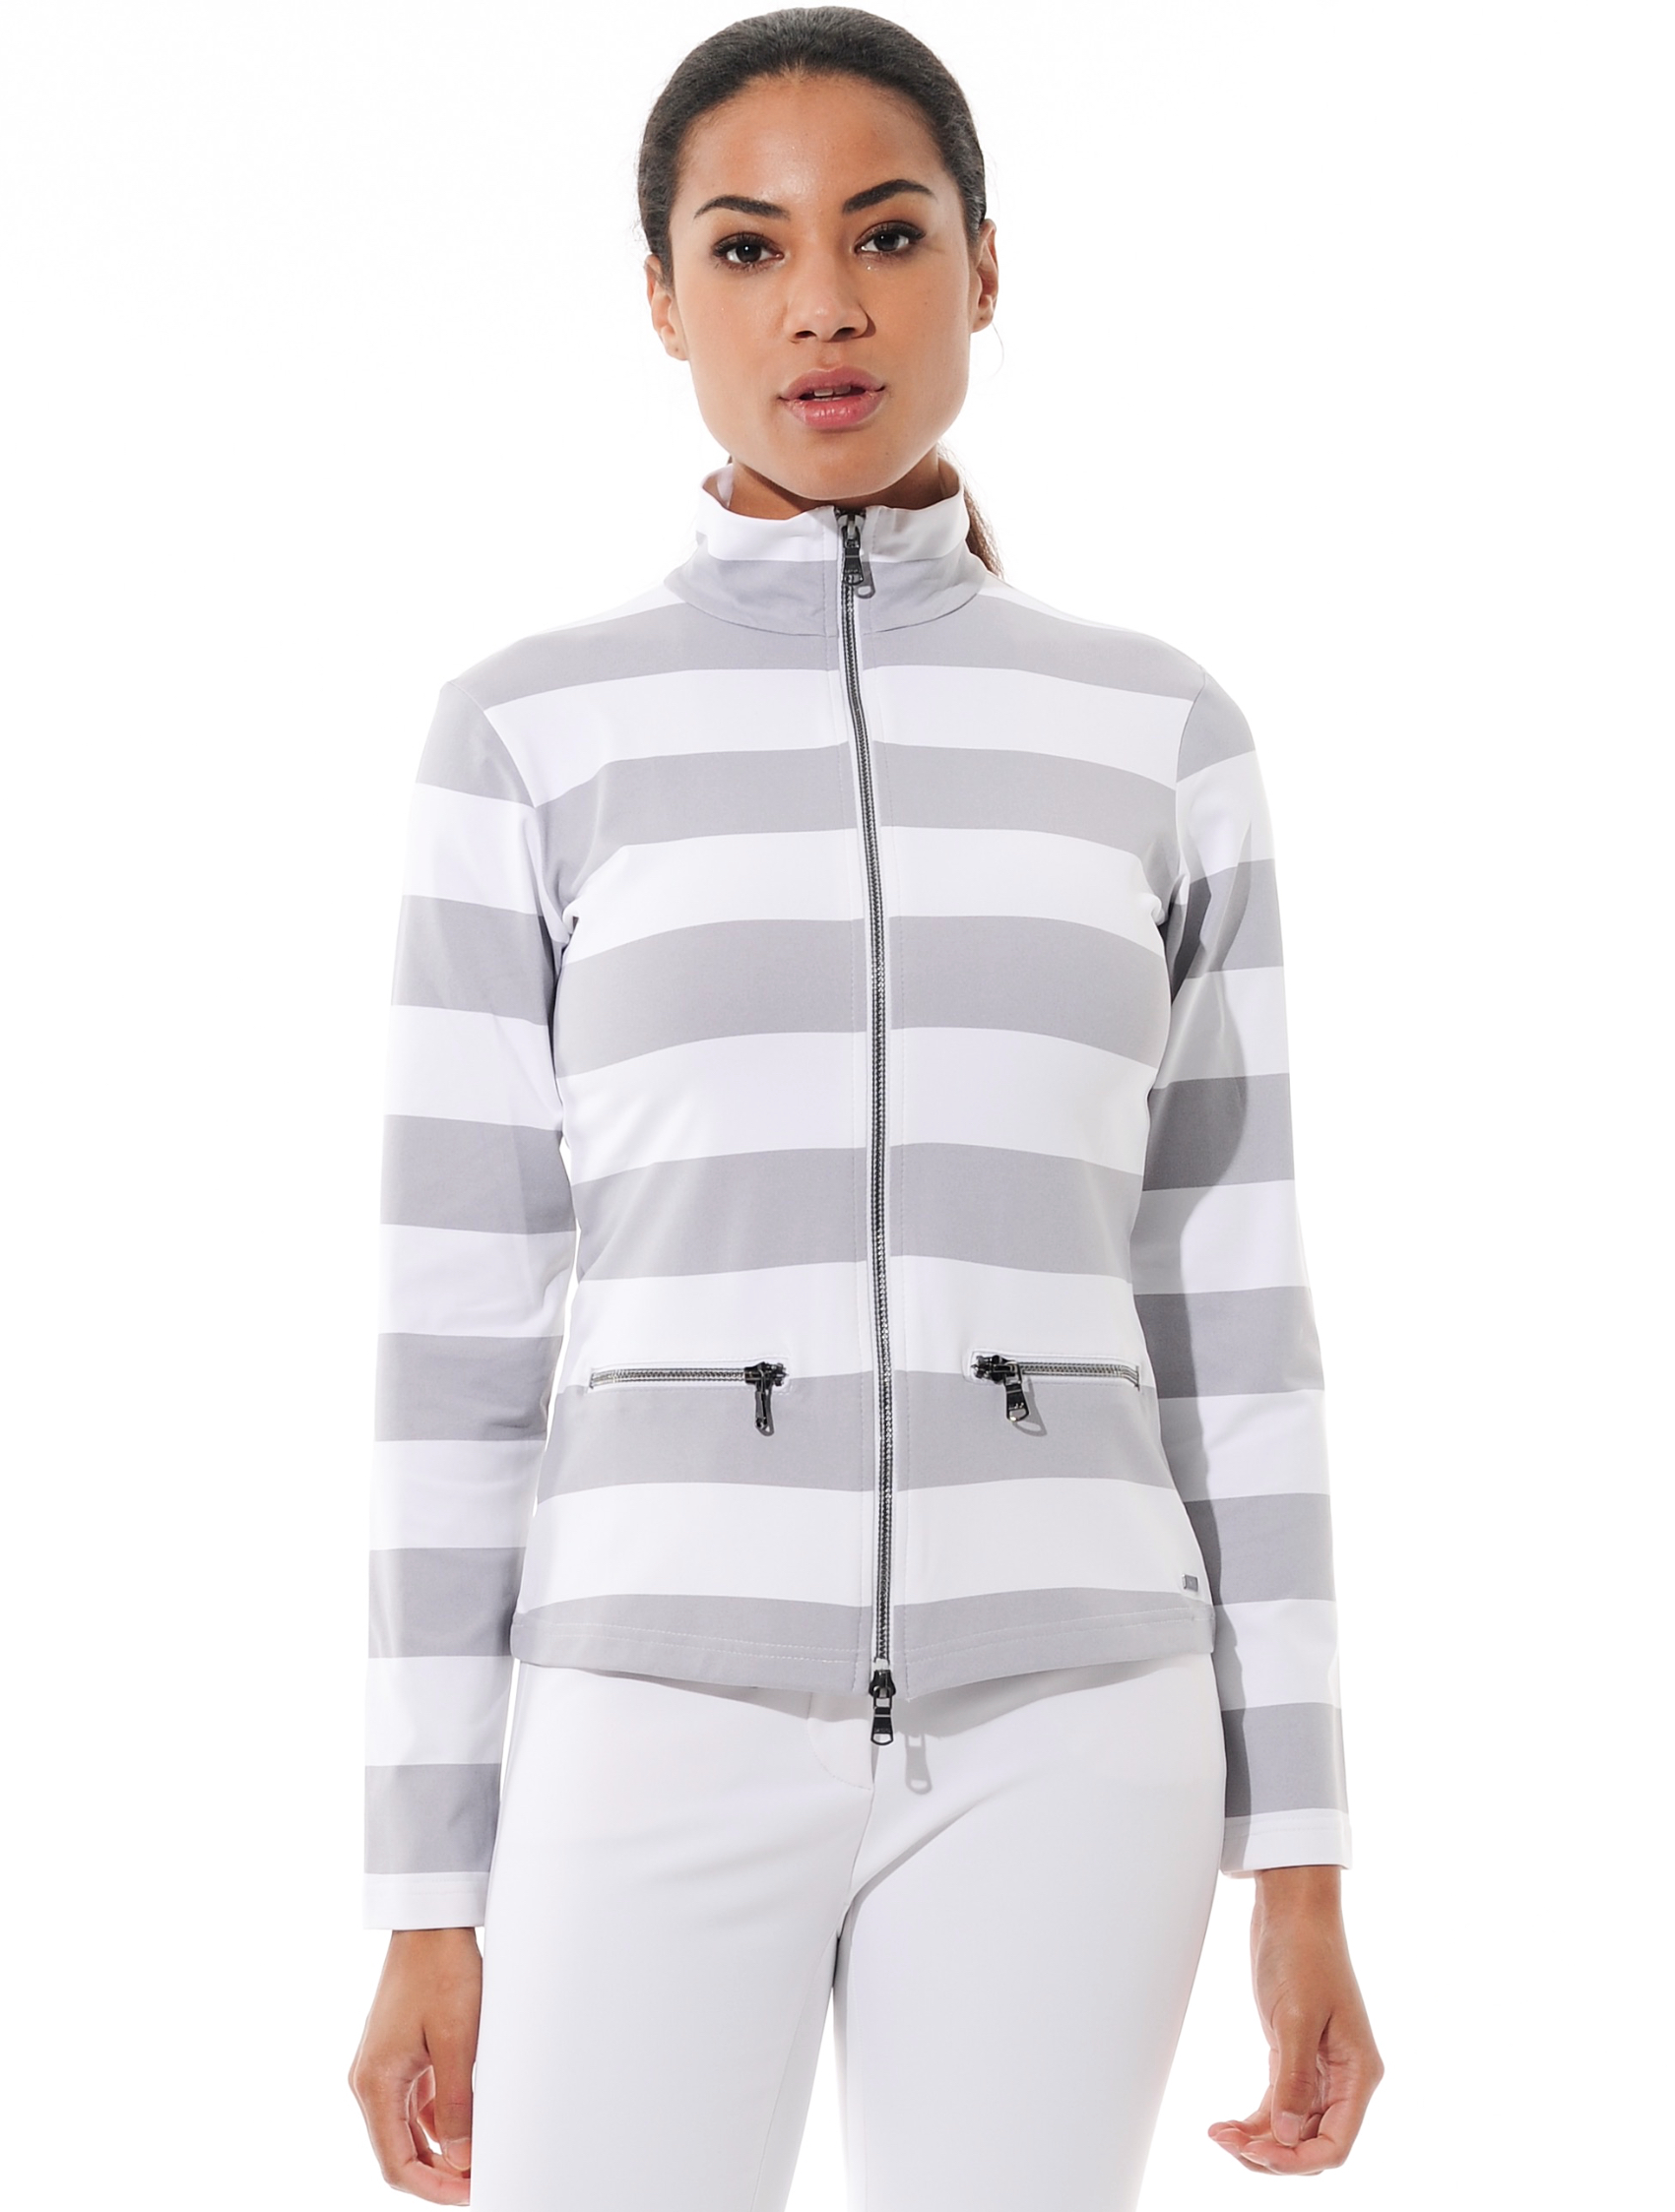 Cross Walk print jacket white/grey 